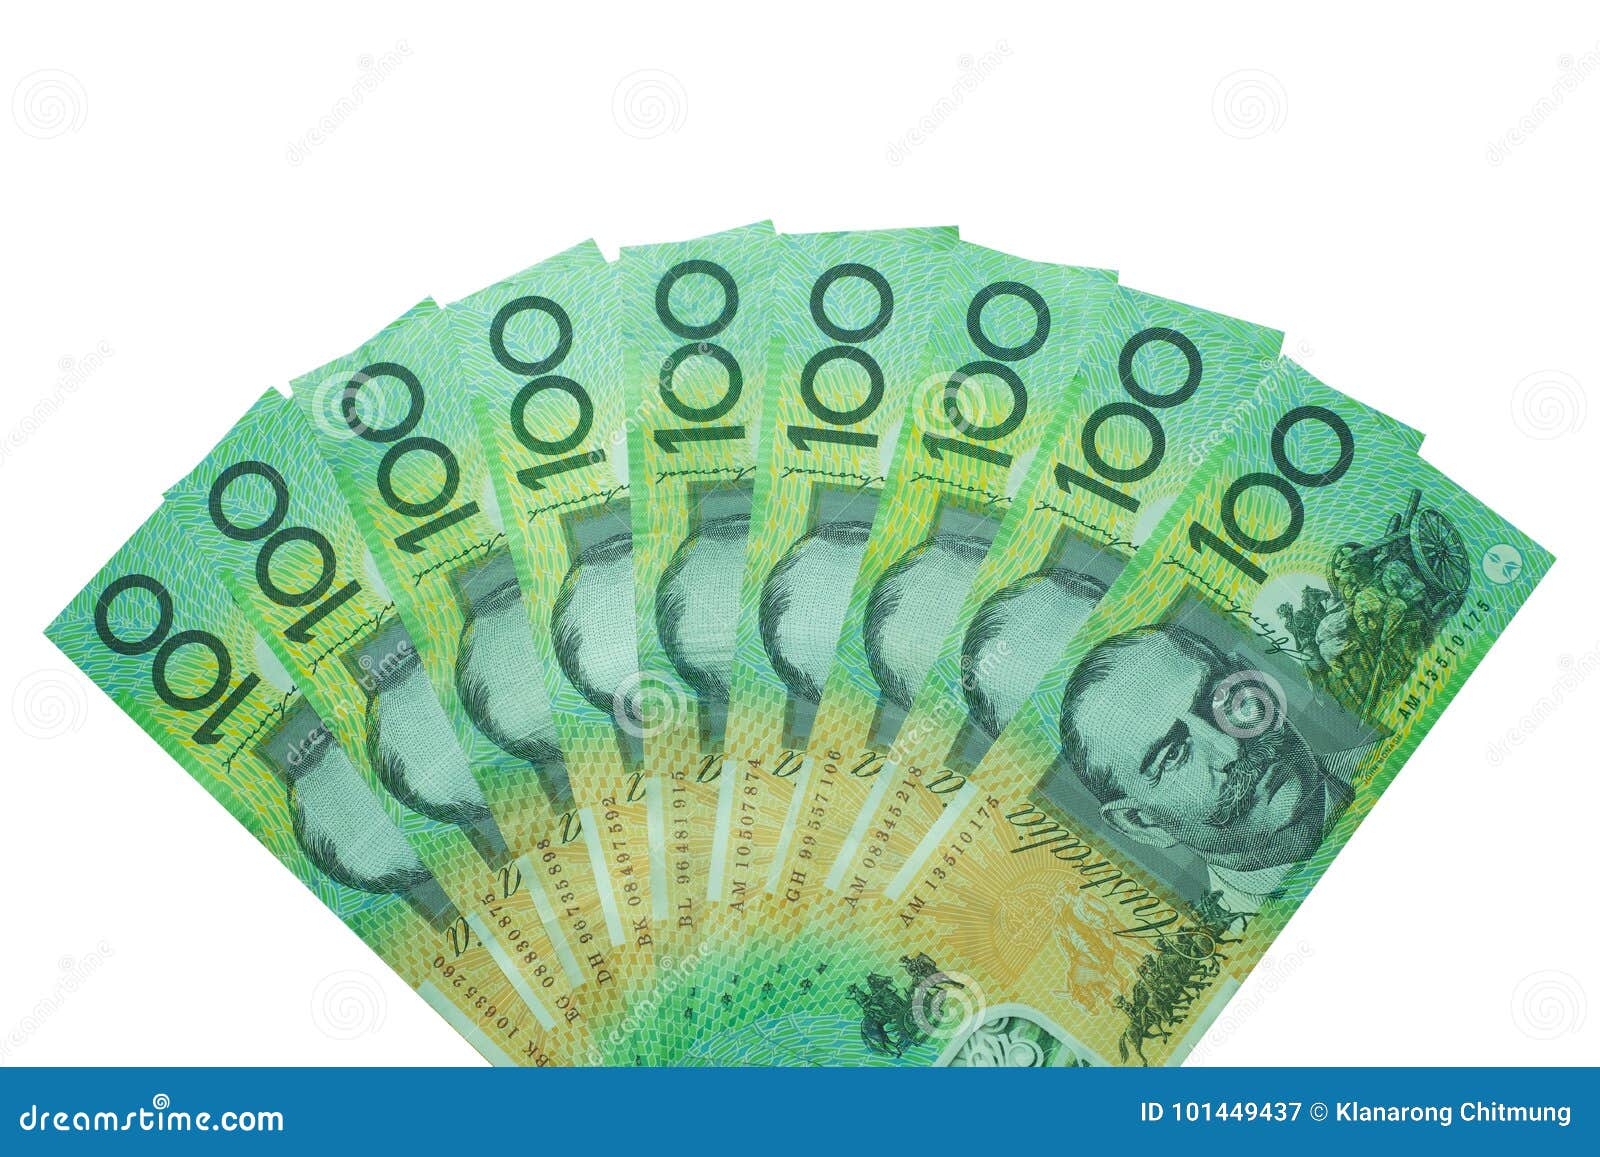 Australian Dollar, Australia Money 100 Dollars Banknotes Stack on Background Stock Image - Image of australian, investment: 101449437